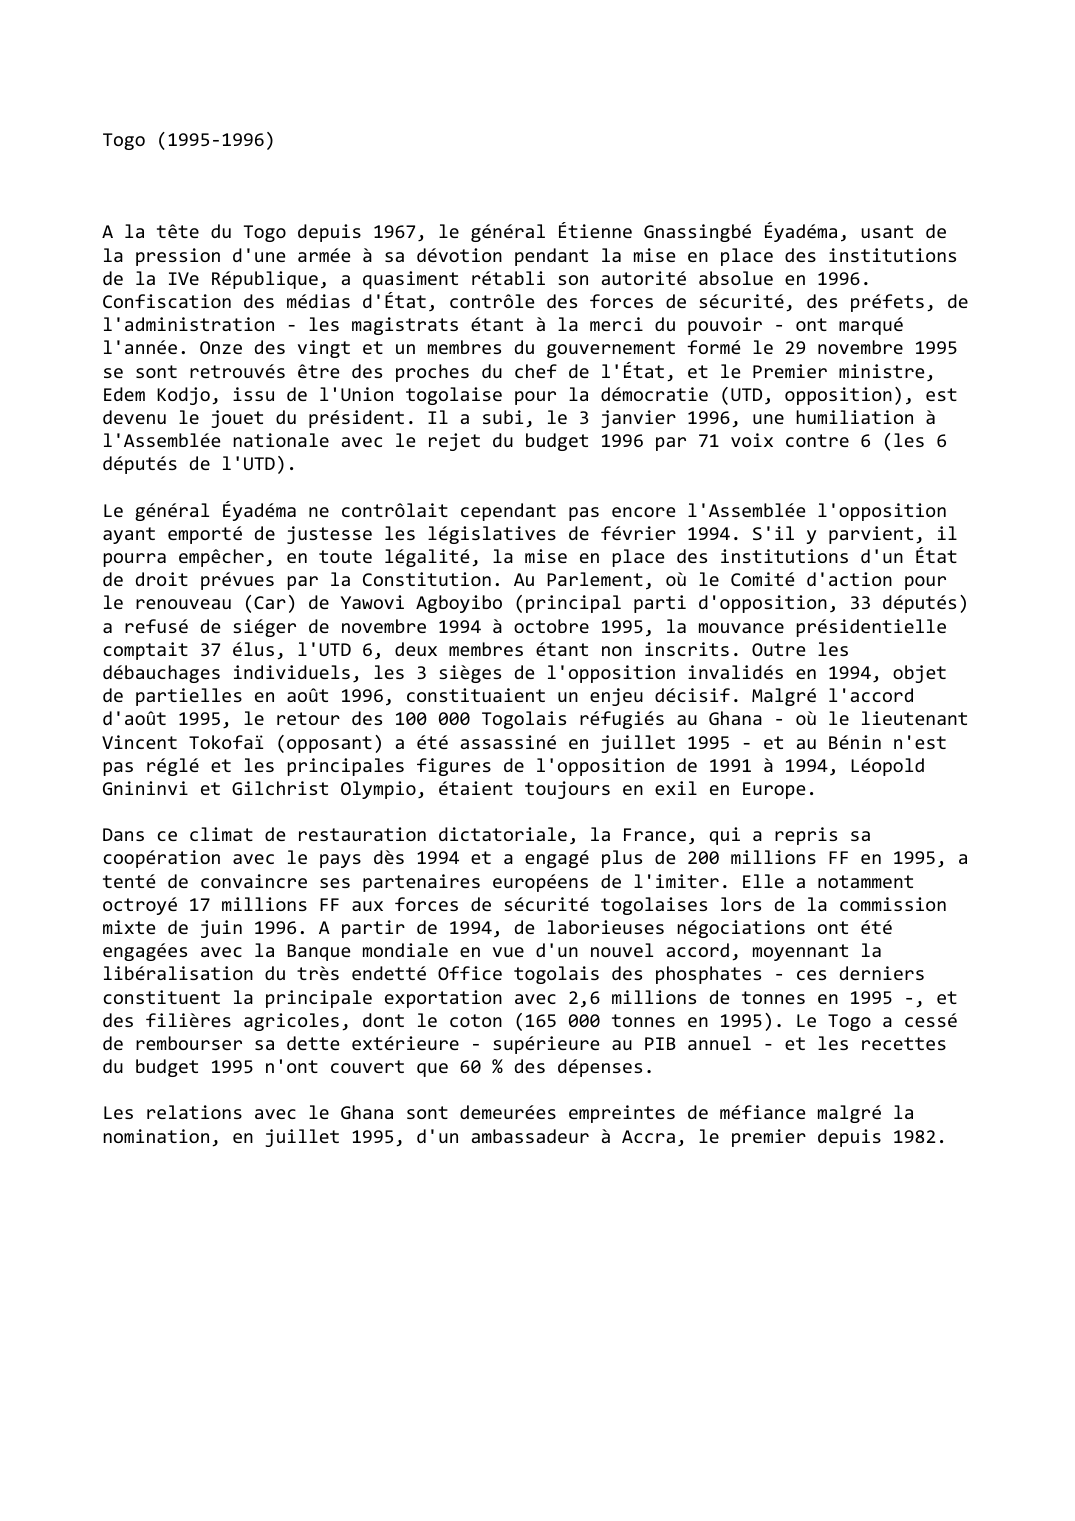 Prévisualisation du document Togo (1995-1996)